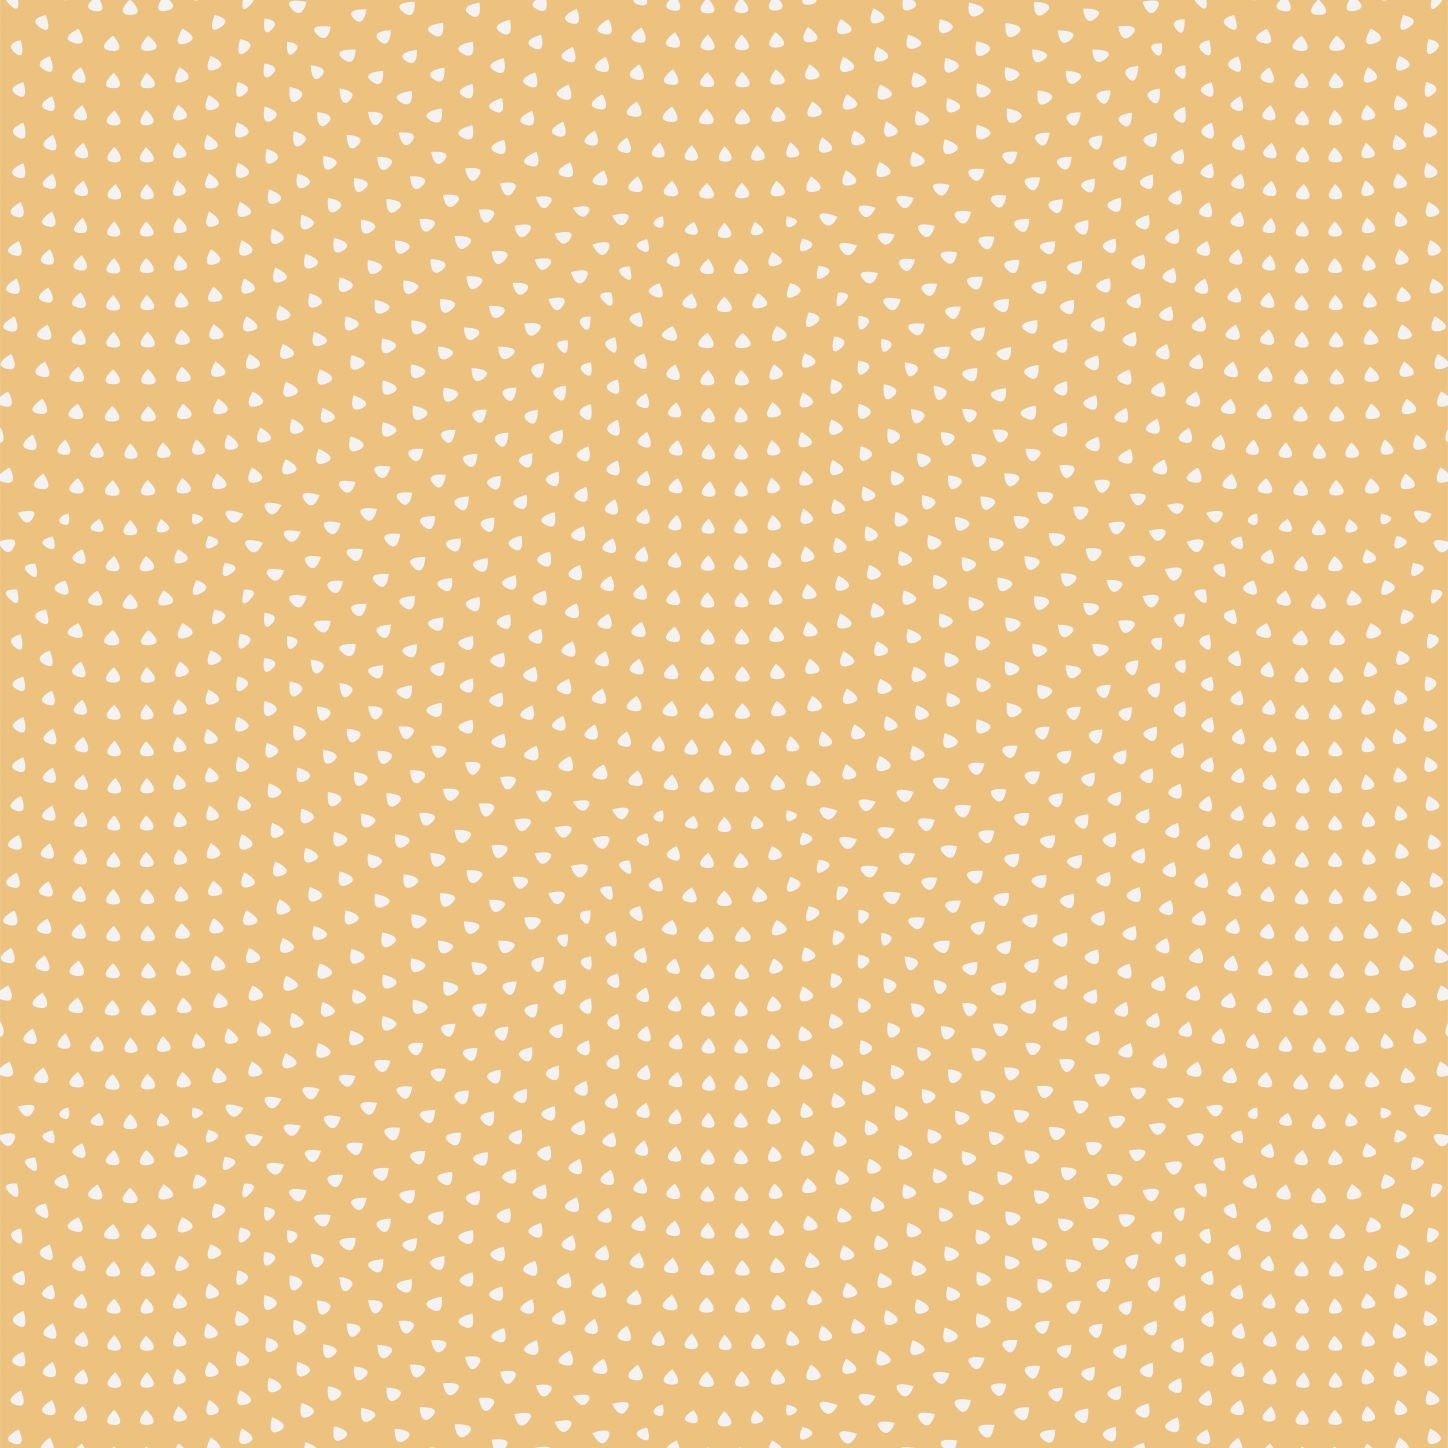 Mustard Scallop Wallpaper | Sample - Munks and Me Wallpaper